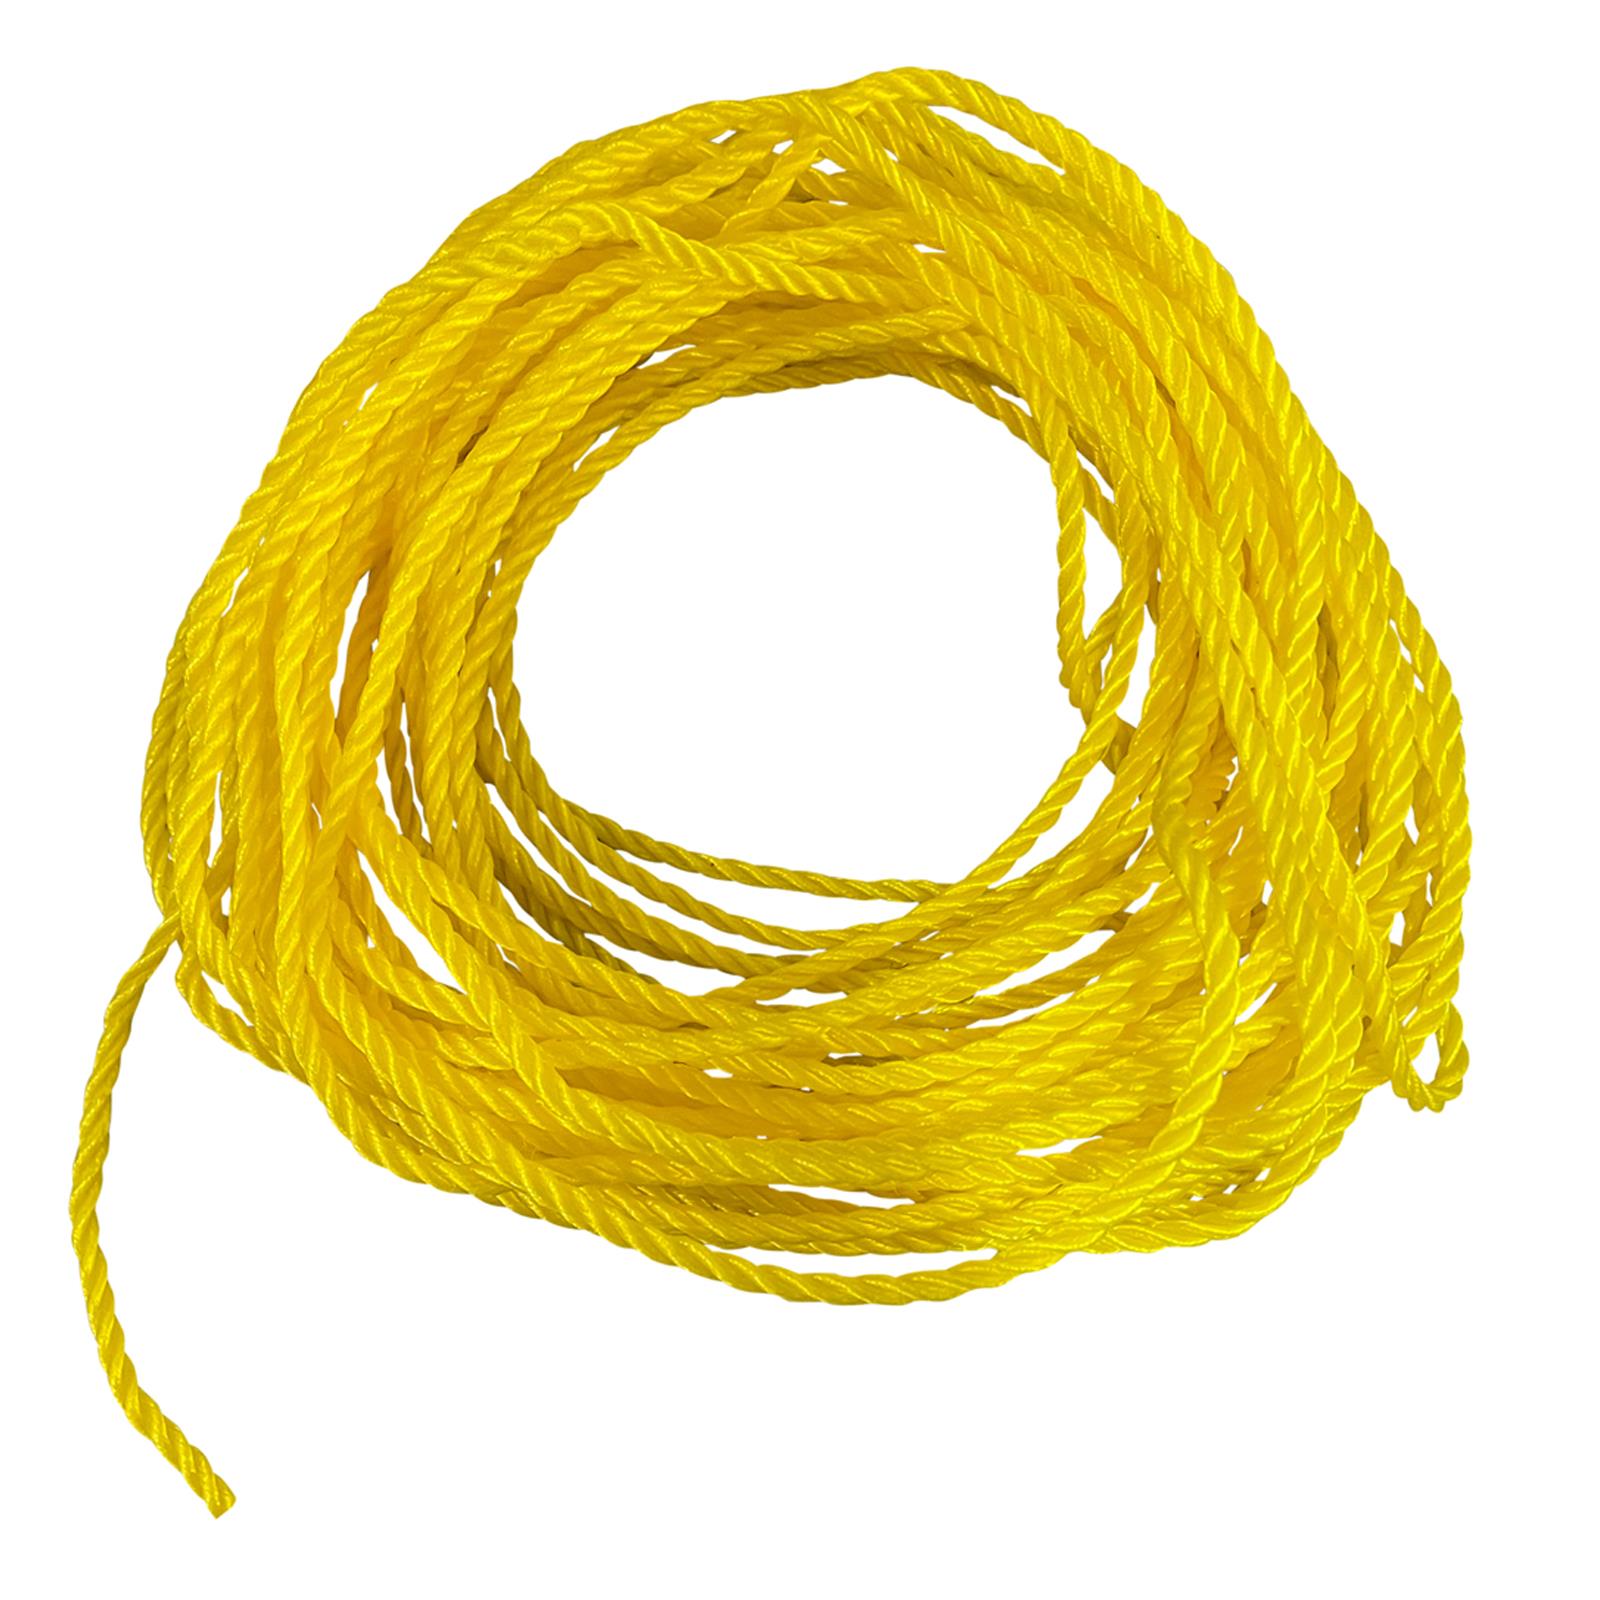 BlueSpot Polypropylene Rope Yellow 15m x 4mm 50ft